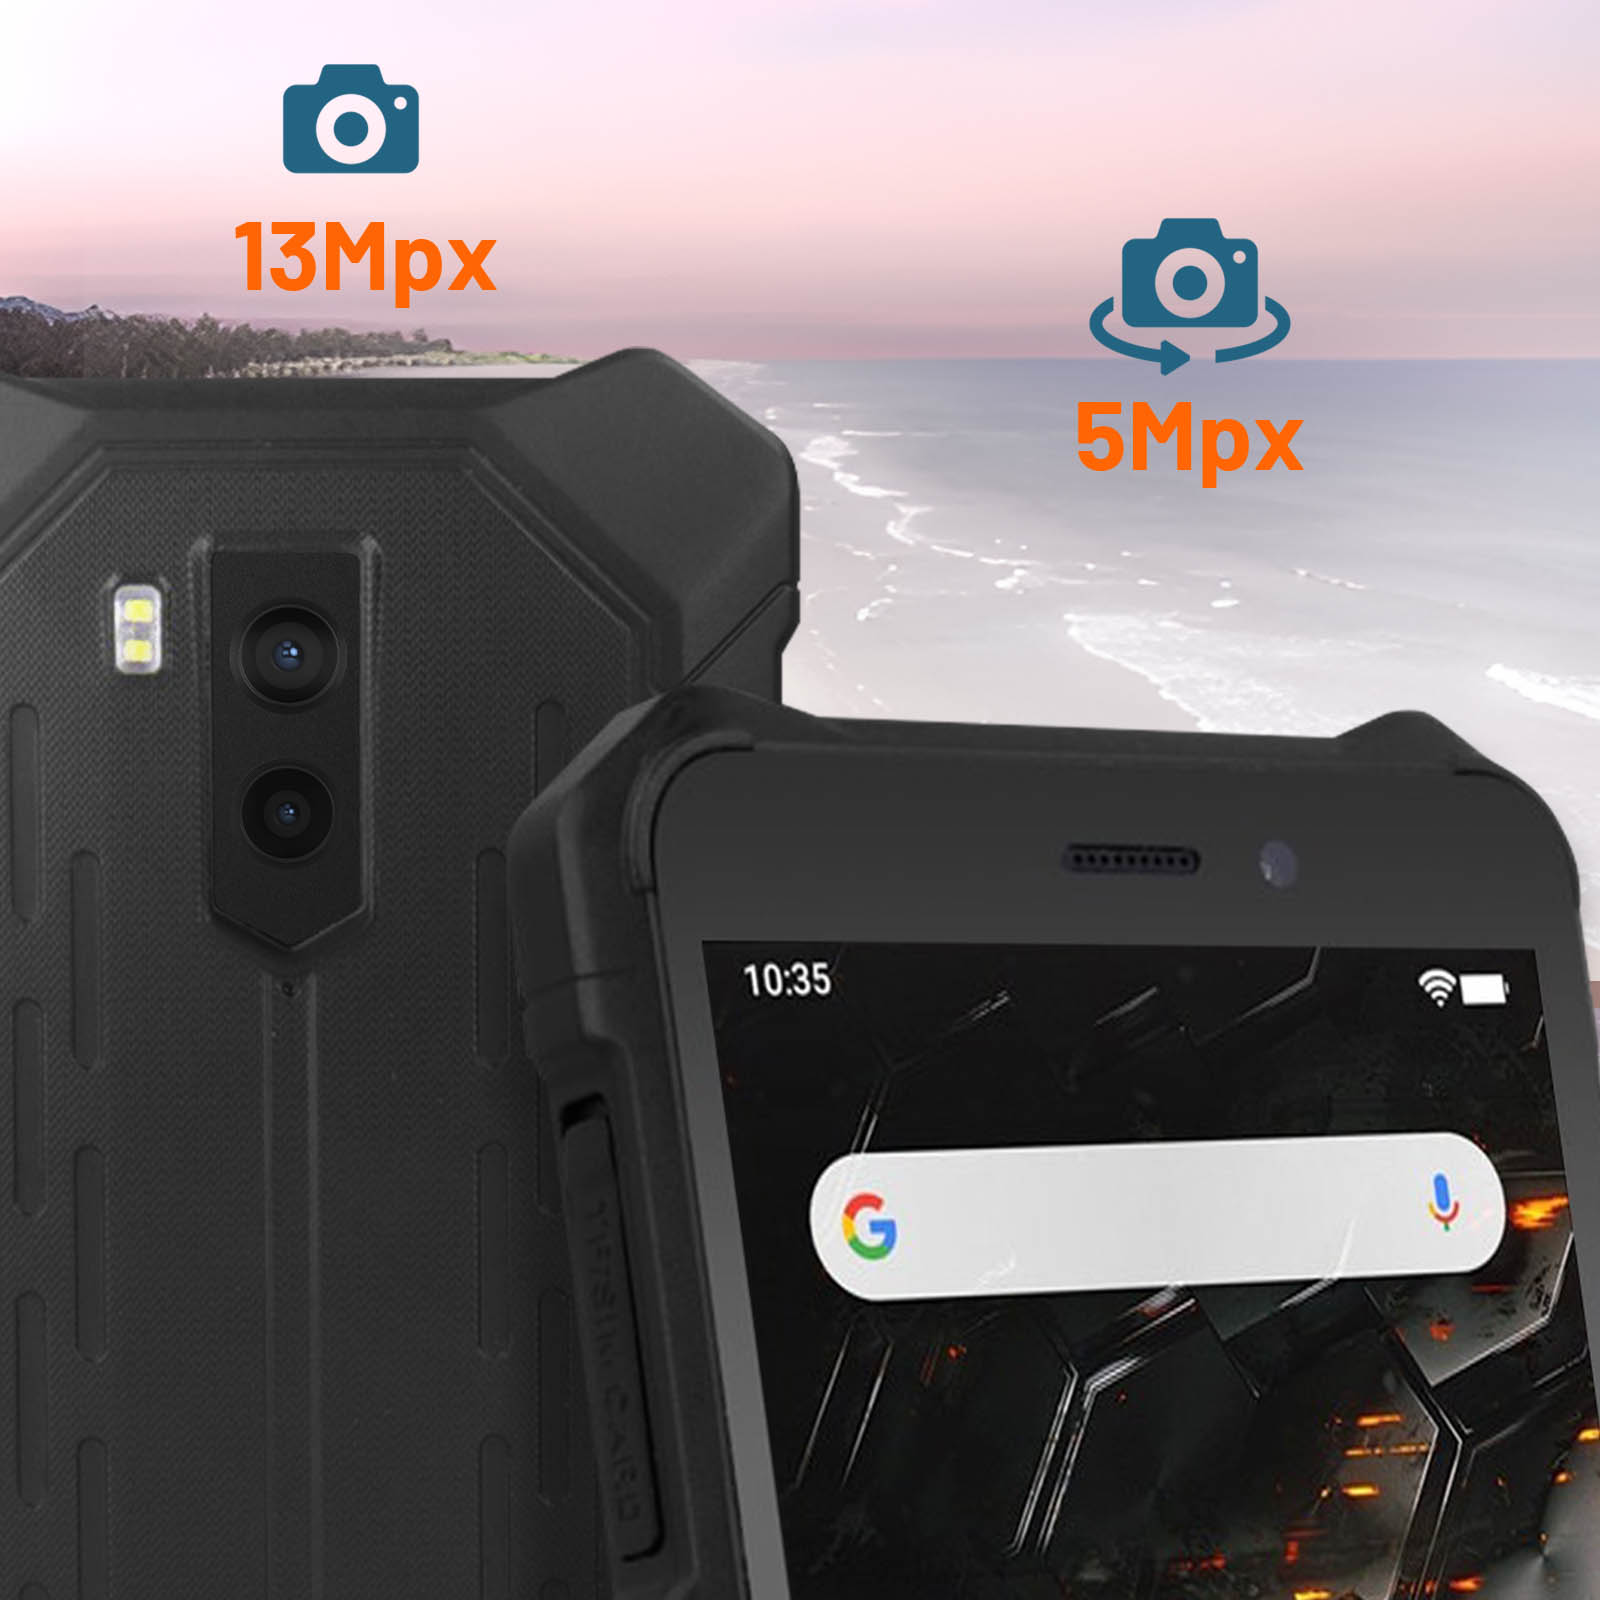 Iron 4G Orange 3 HAMMER Starter Pack Glas-Folie: 9H Smartphones, + LTE